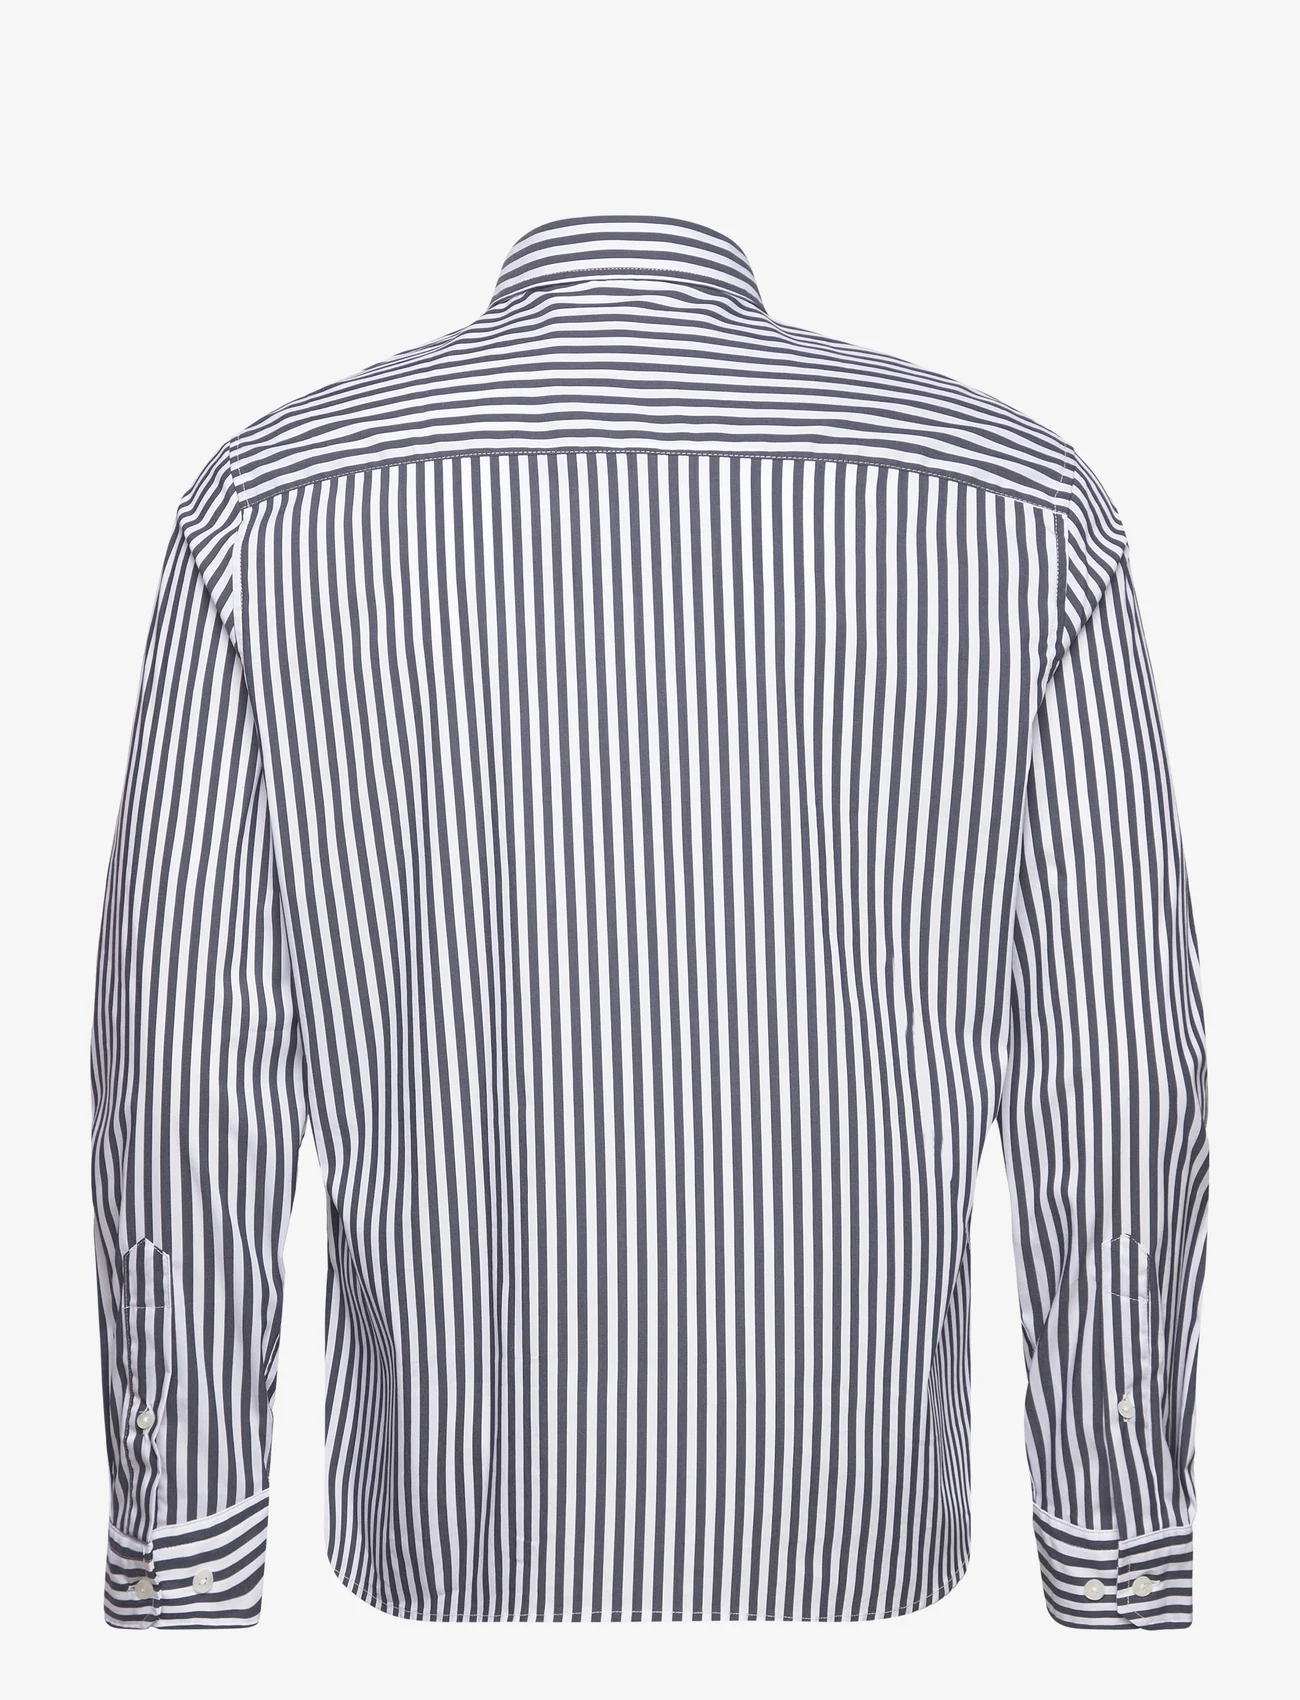 Gabba - York Wert - casual overhemden - navy stripe - 1